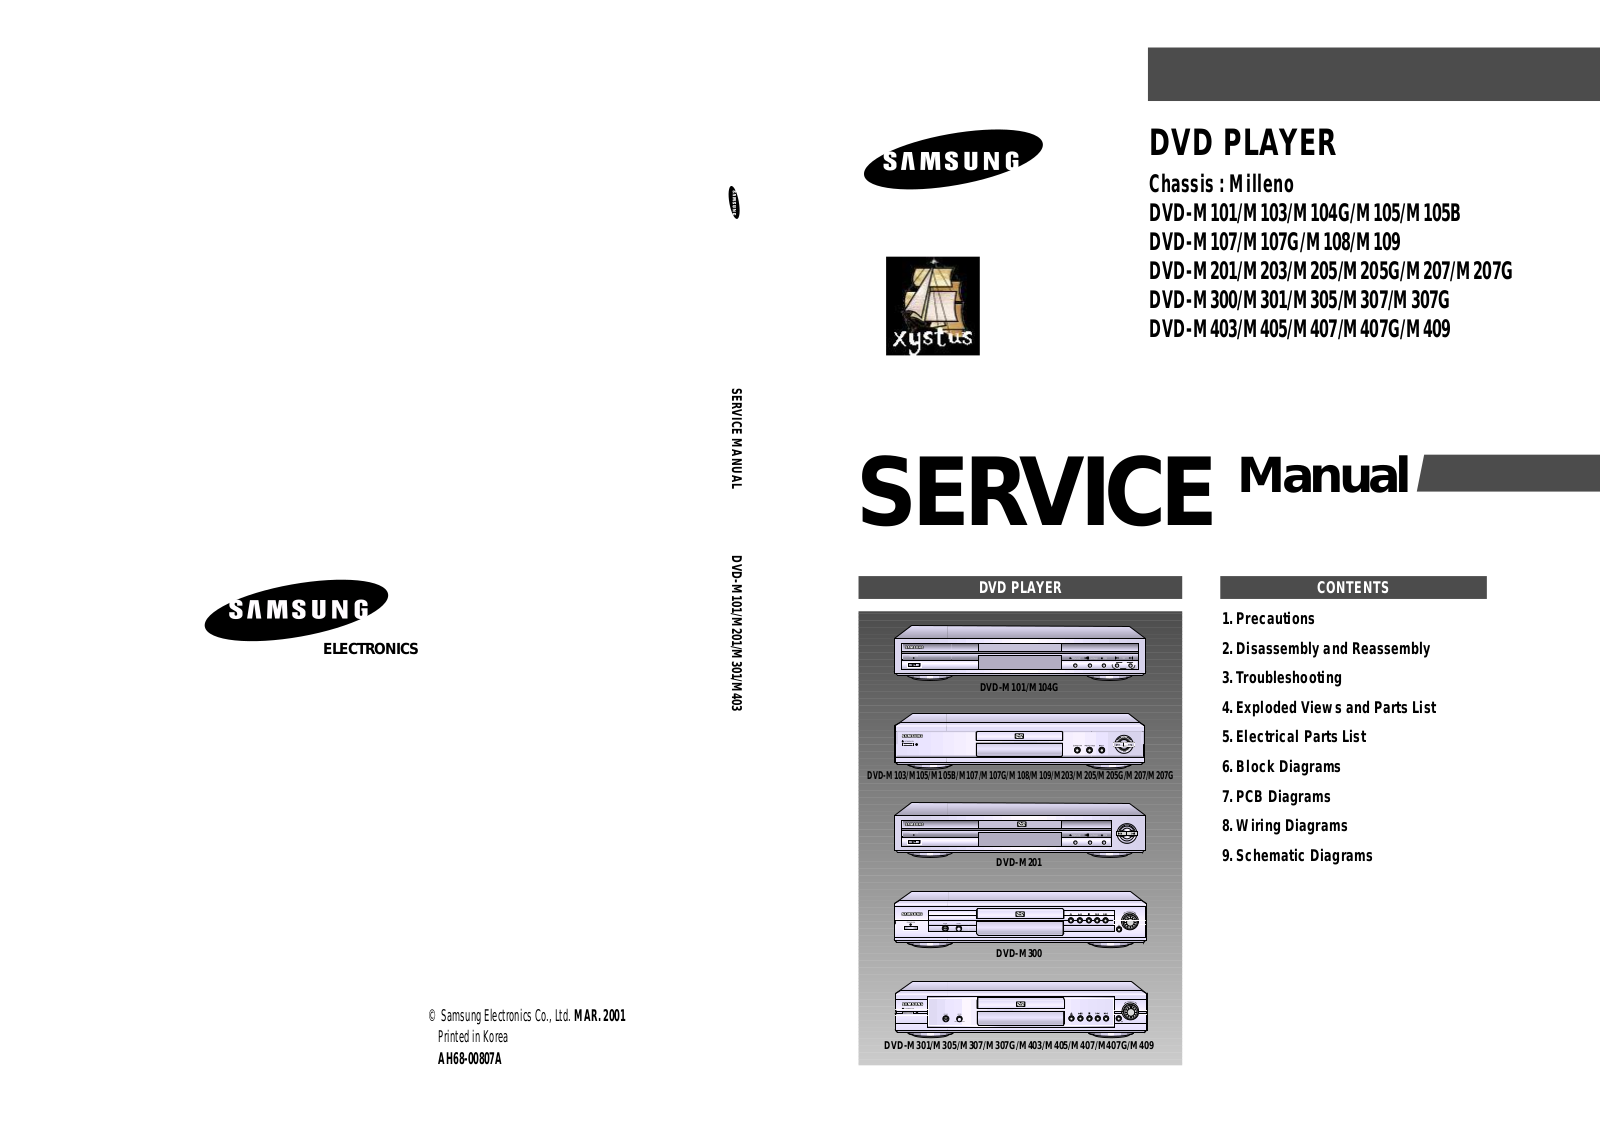 samsung DVD-M101, DVD-M, DVD-M103, DVD-M104G, DVD-M105 Service Manual